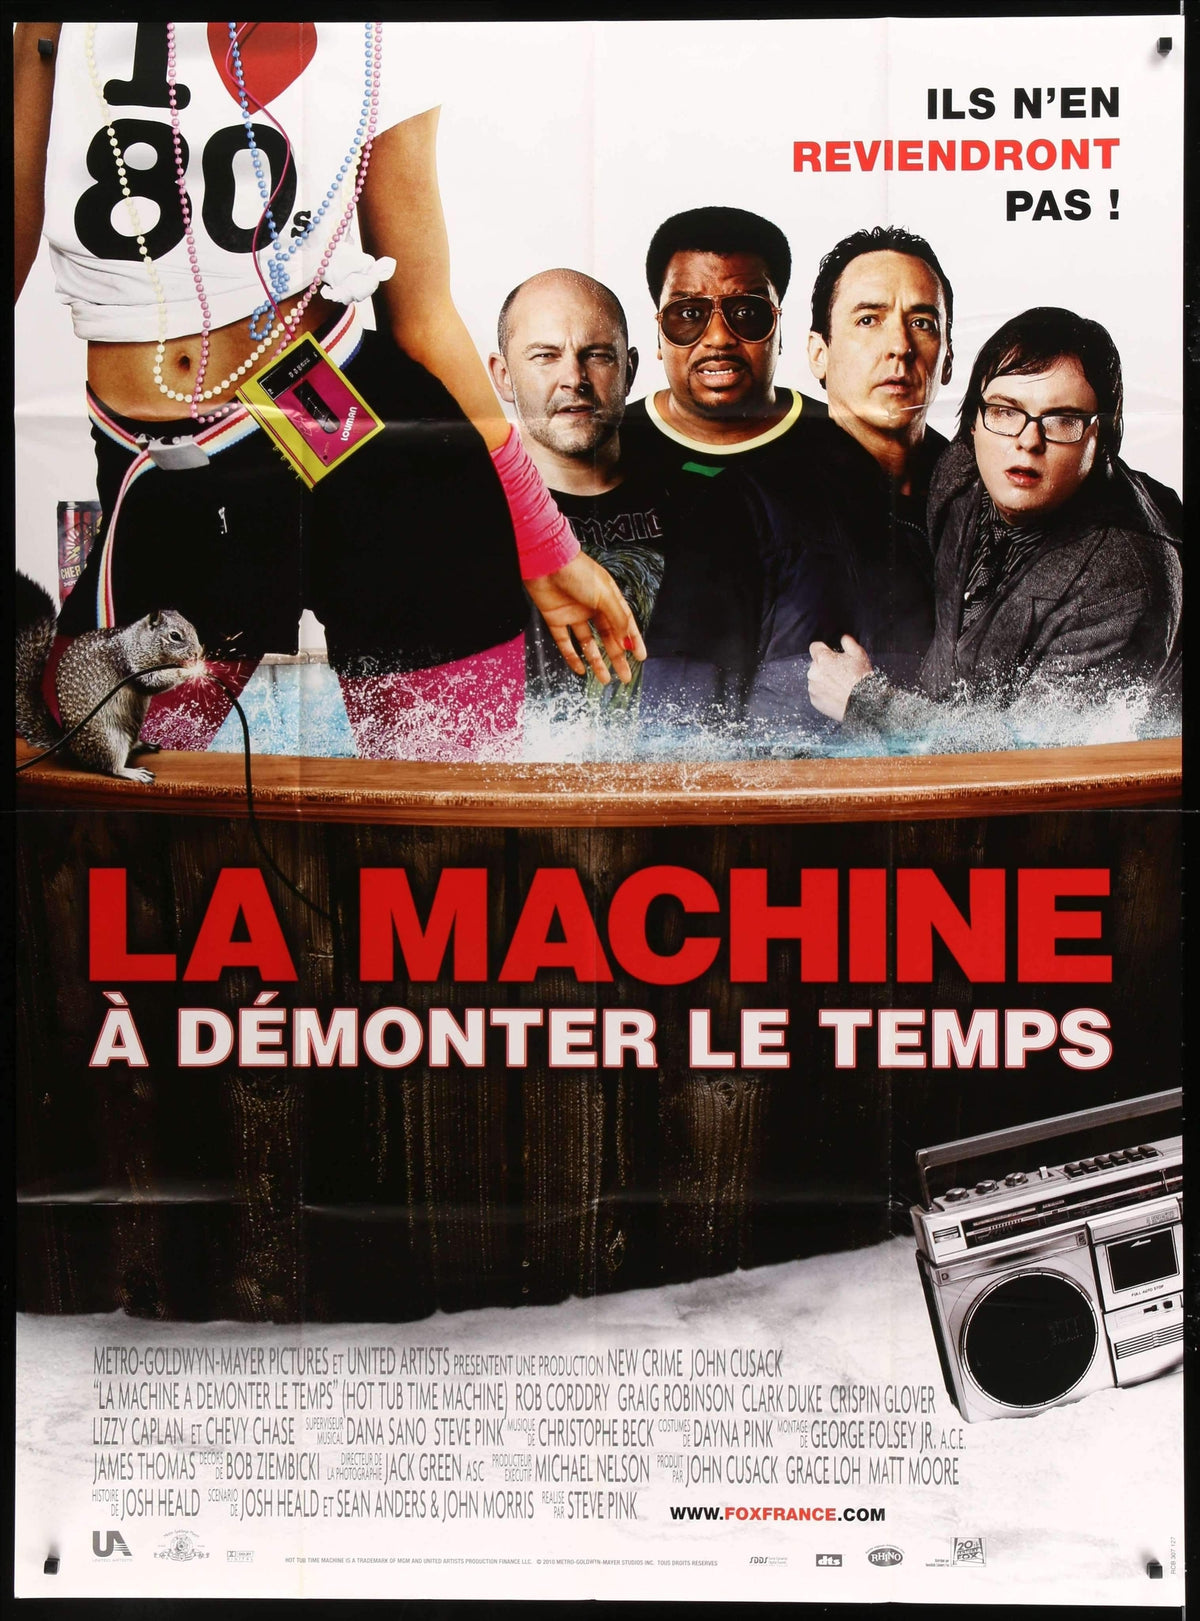 Hot Tub Time Machine (2010) original movie poster for sale at Original Film Art